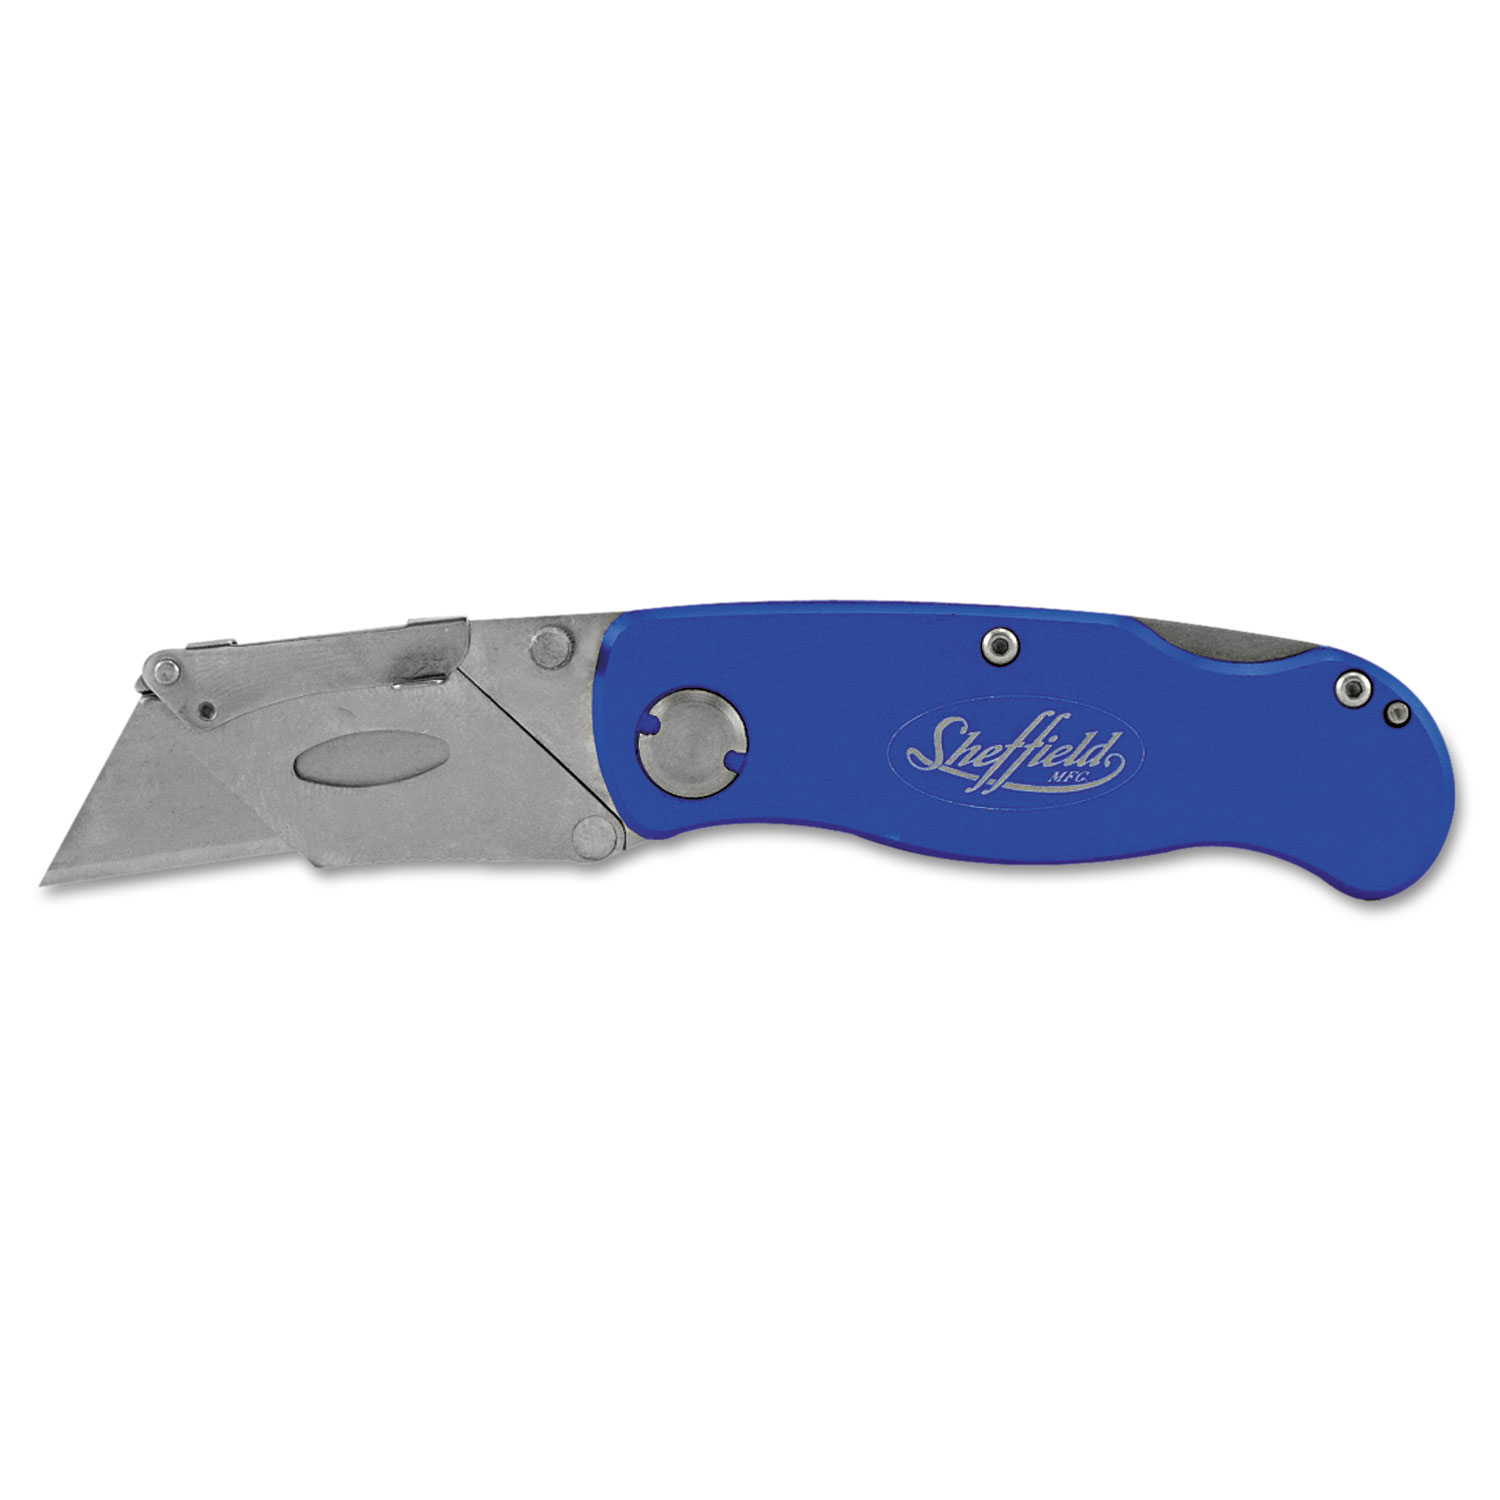 Sheffield Folding Lockback Knife, 1 Utility Blade, 2